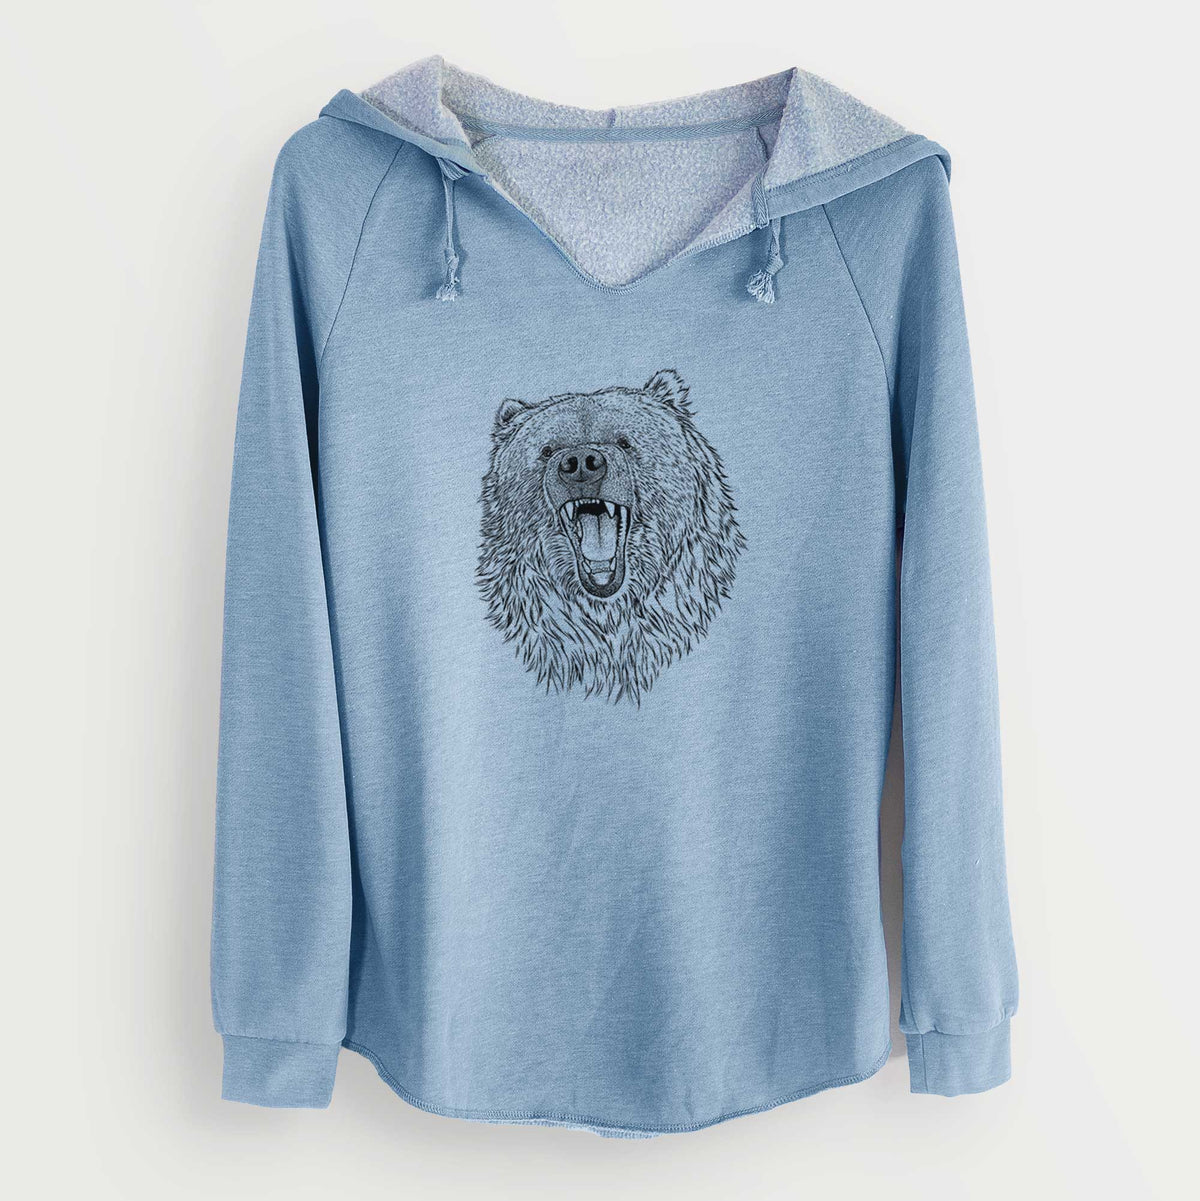 Ursus arctos - Kodiak Bear - Cali Wave Hooded Sweatshirt